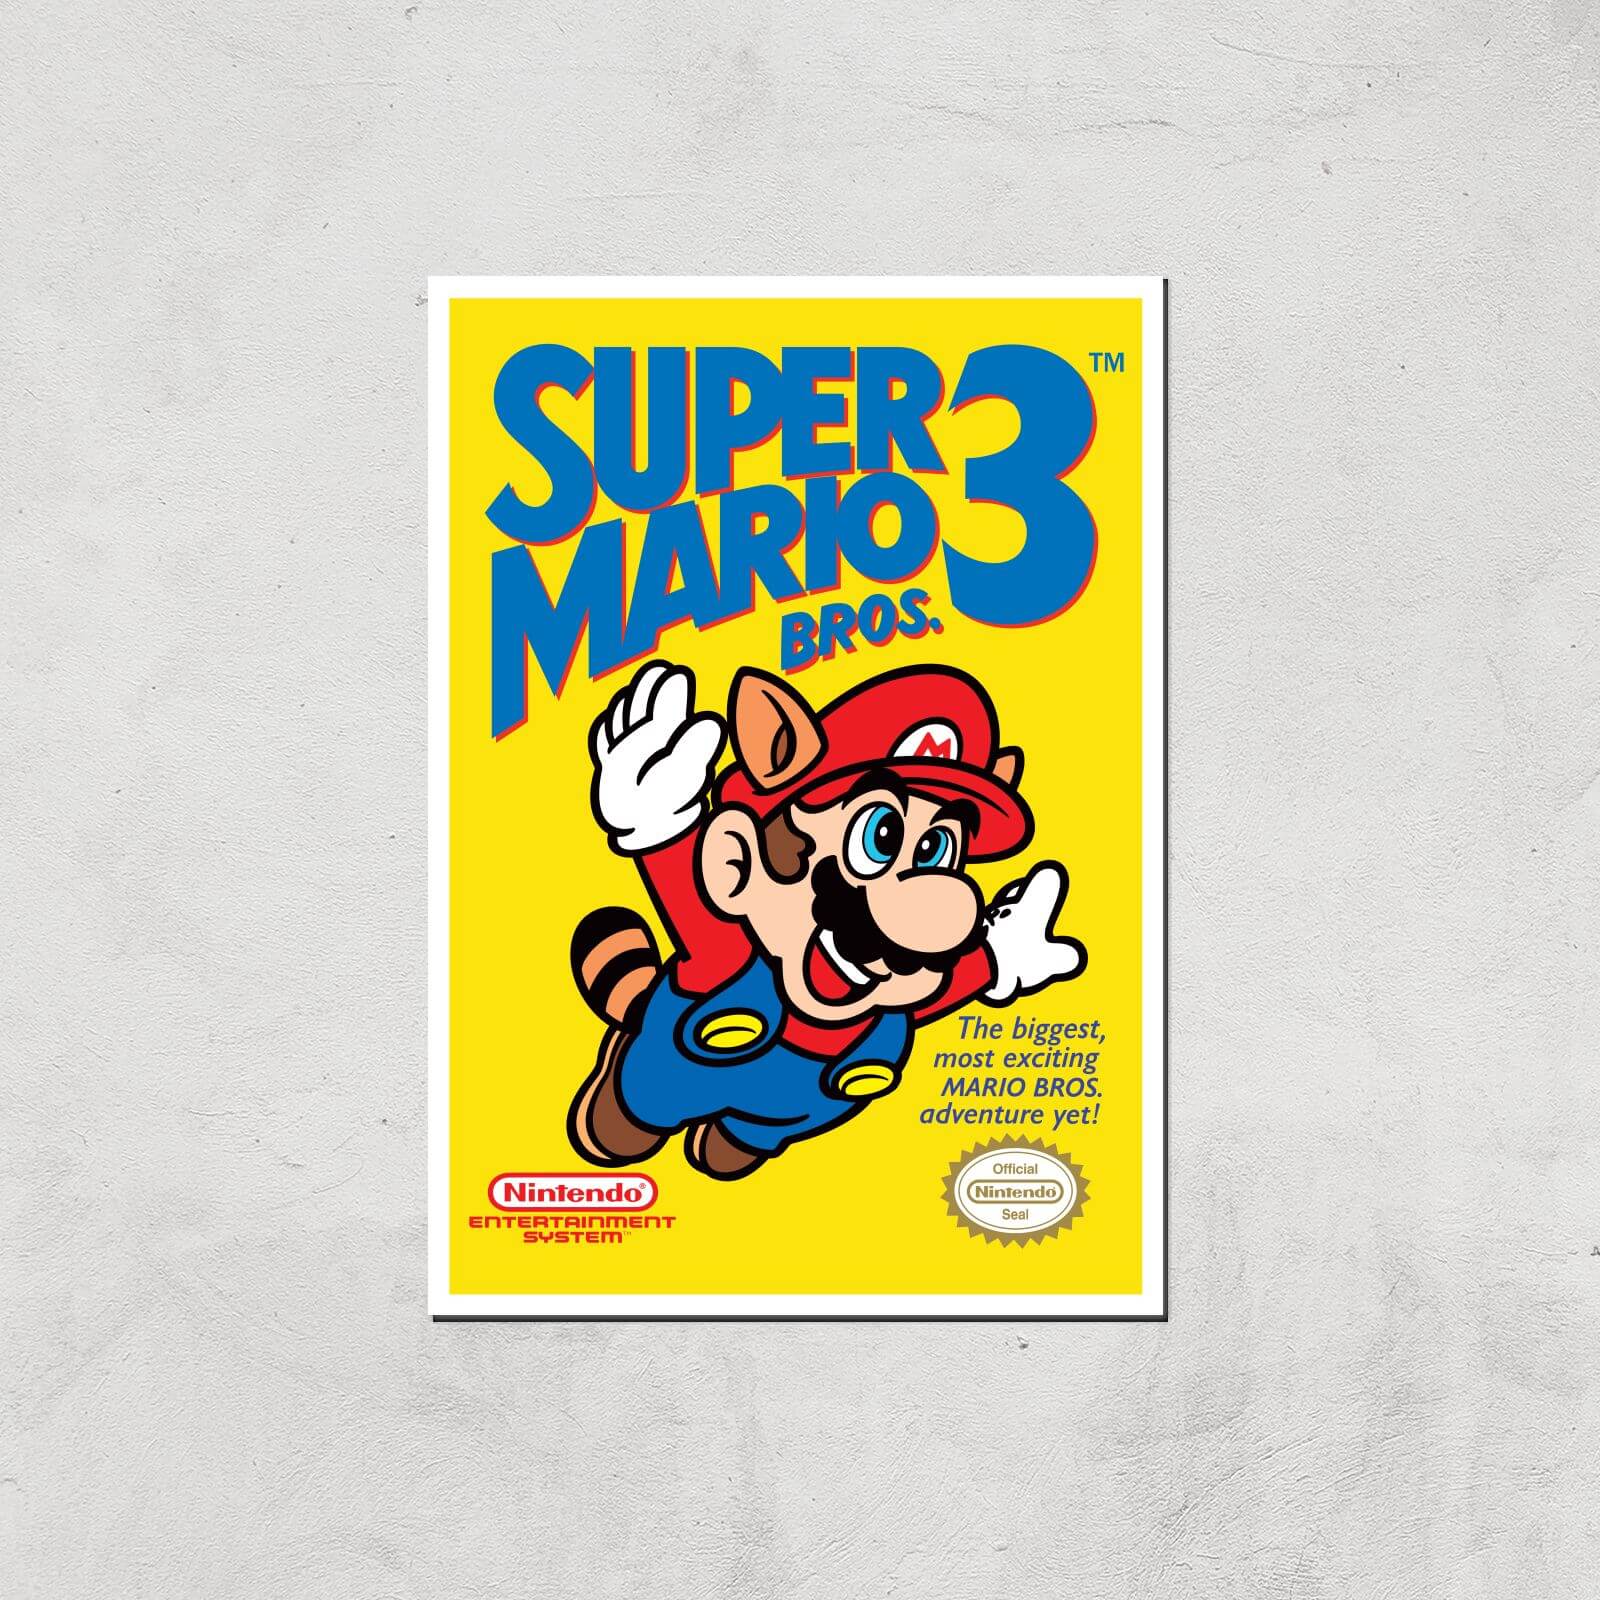 Nintendo Super Mario Bros 3 Art Print - A3 - Print Only